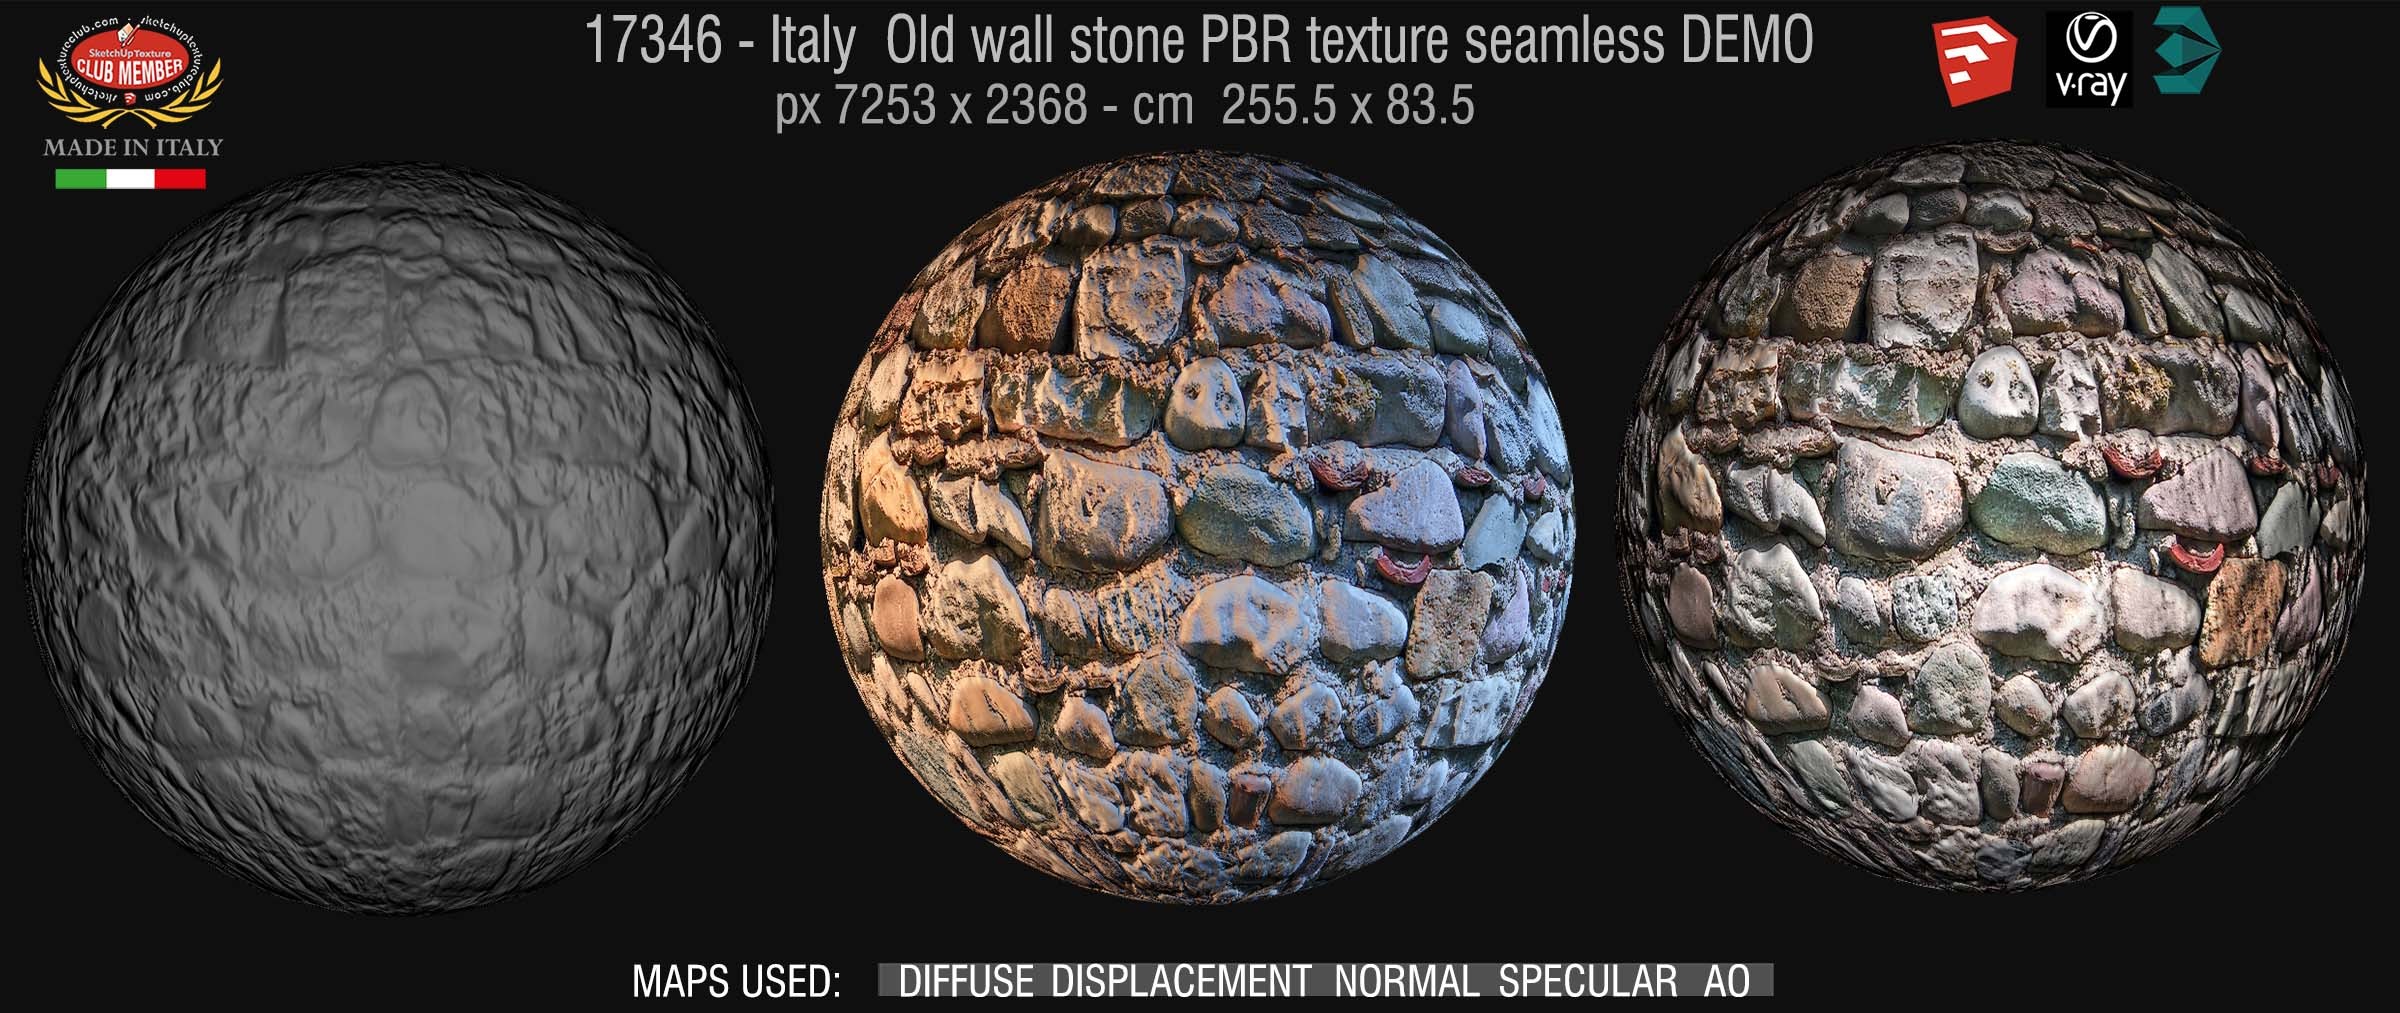 209_Italy olad wall stone PBR texture seamless DEMO